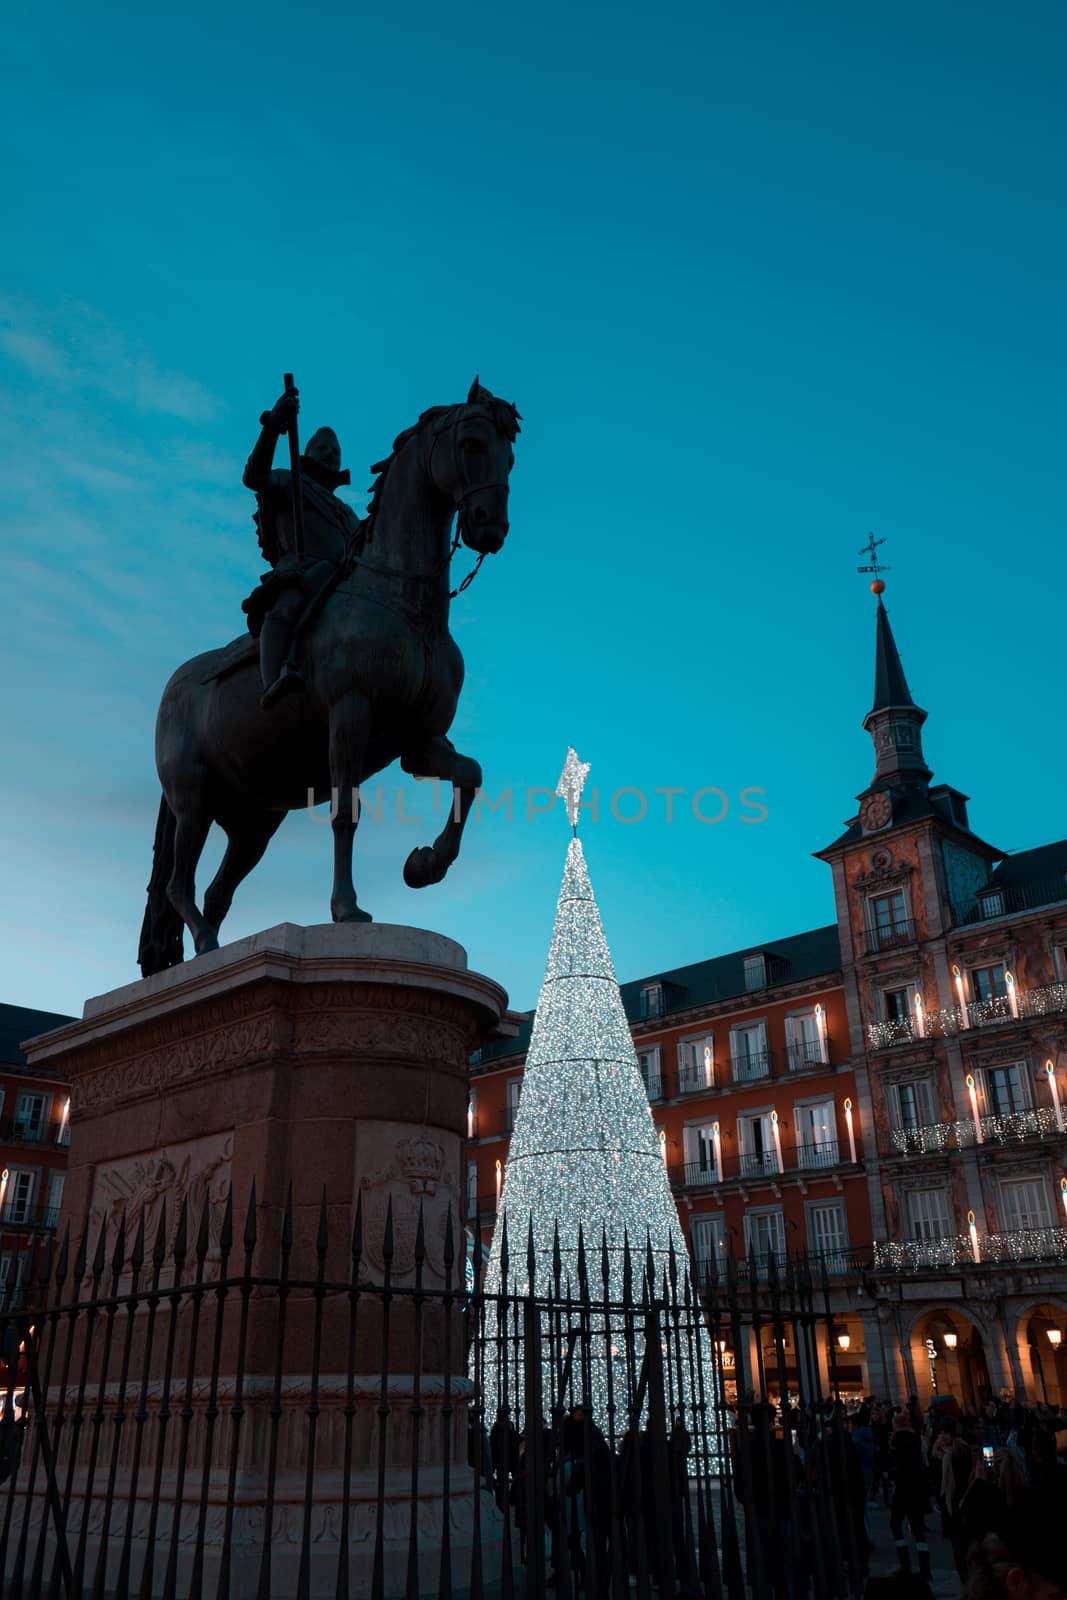 Madrid, bronze statue of King Philip III and illuminated christmas tree in Plaza Mayor by tanaonte